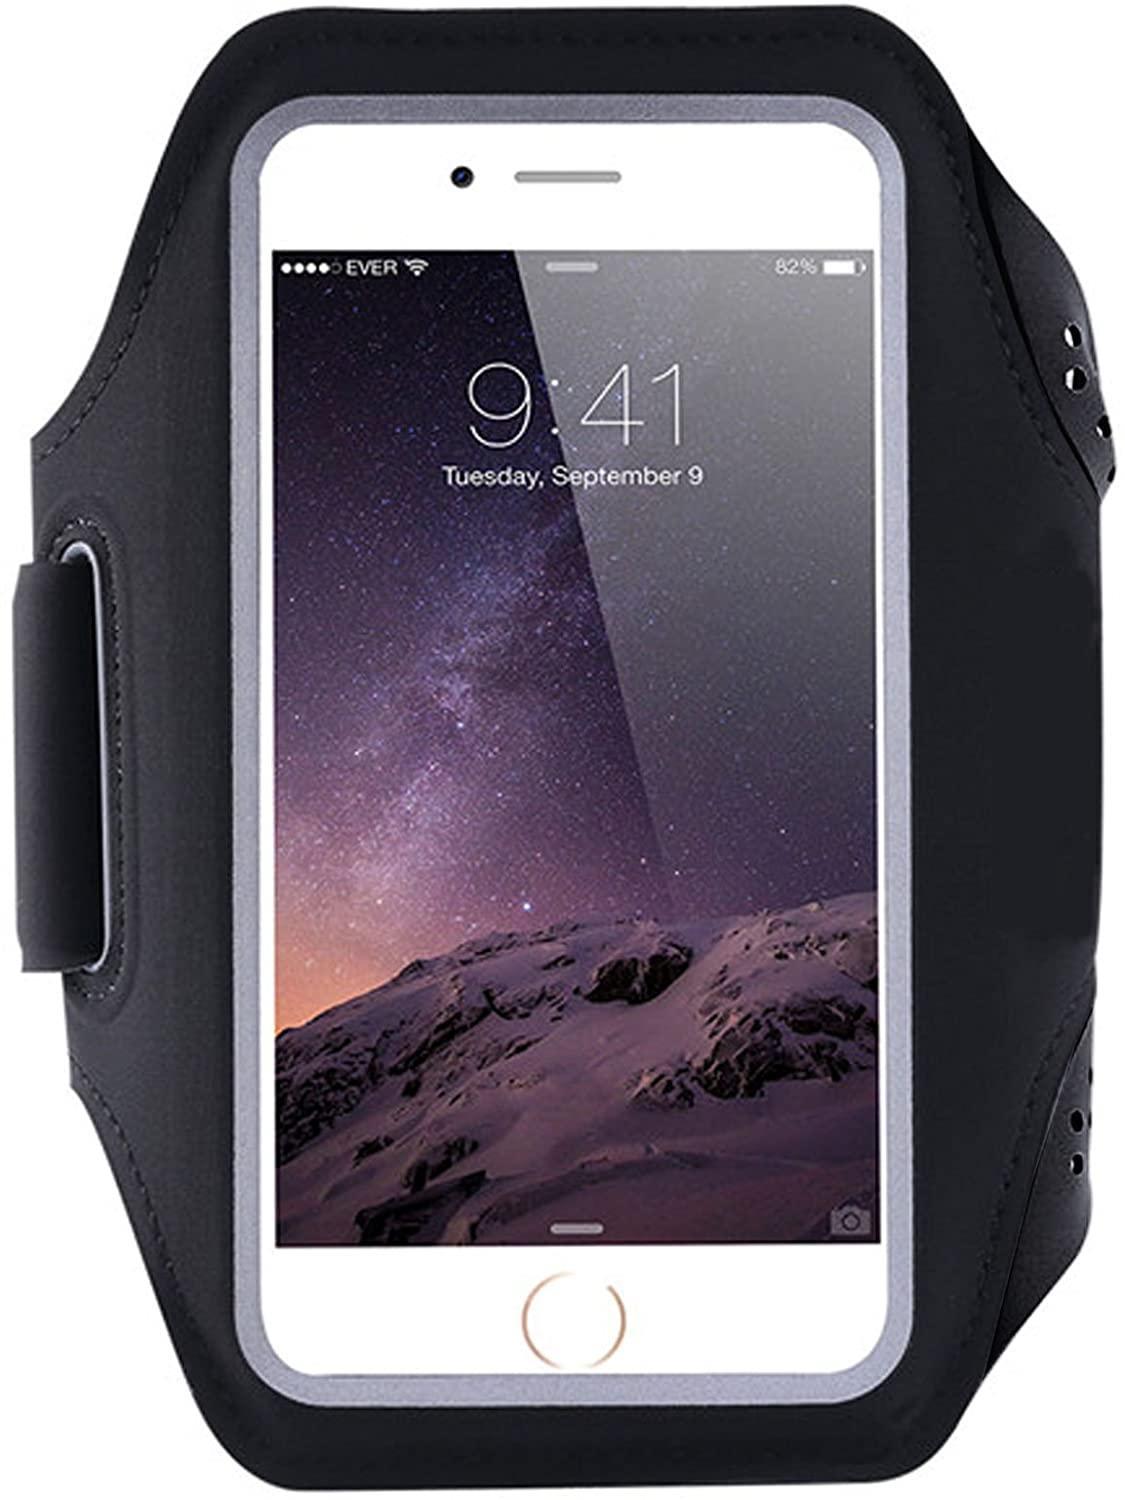 Universal Breathable Sports jogging running gym phone Armband arm strap—Black